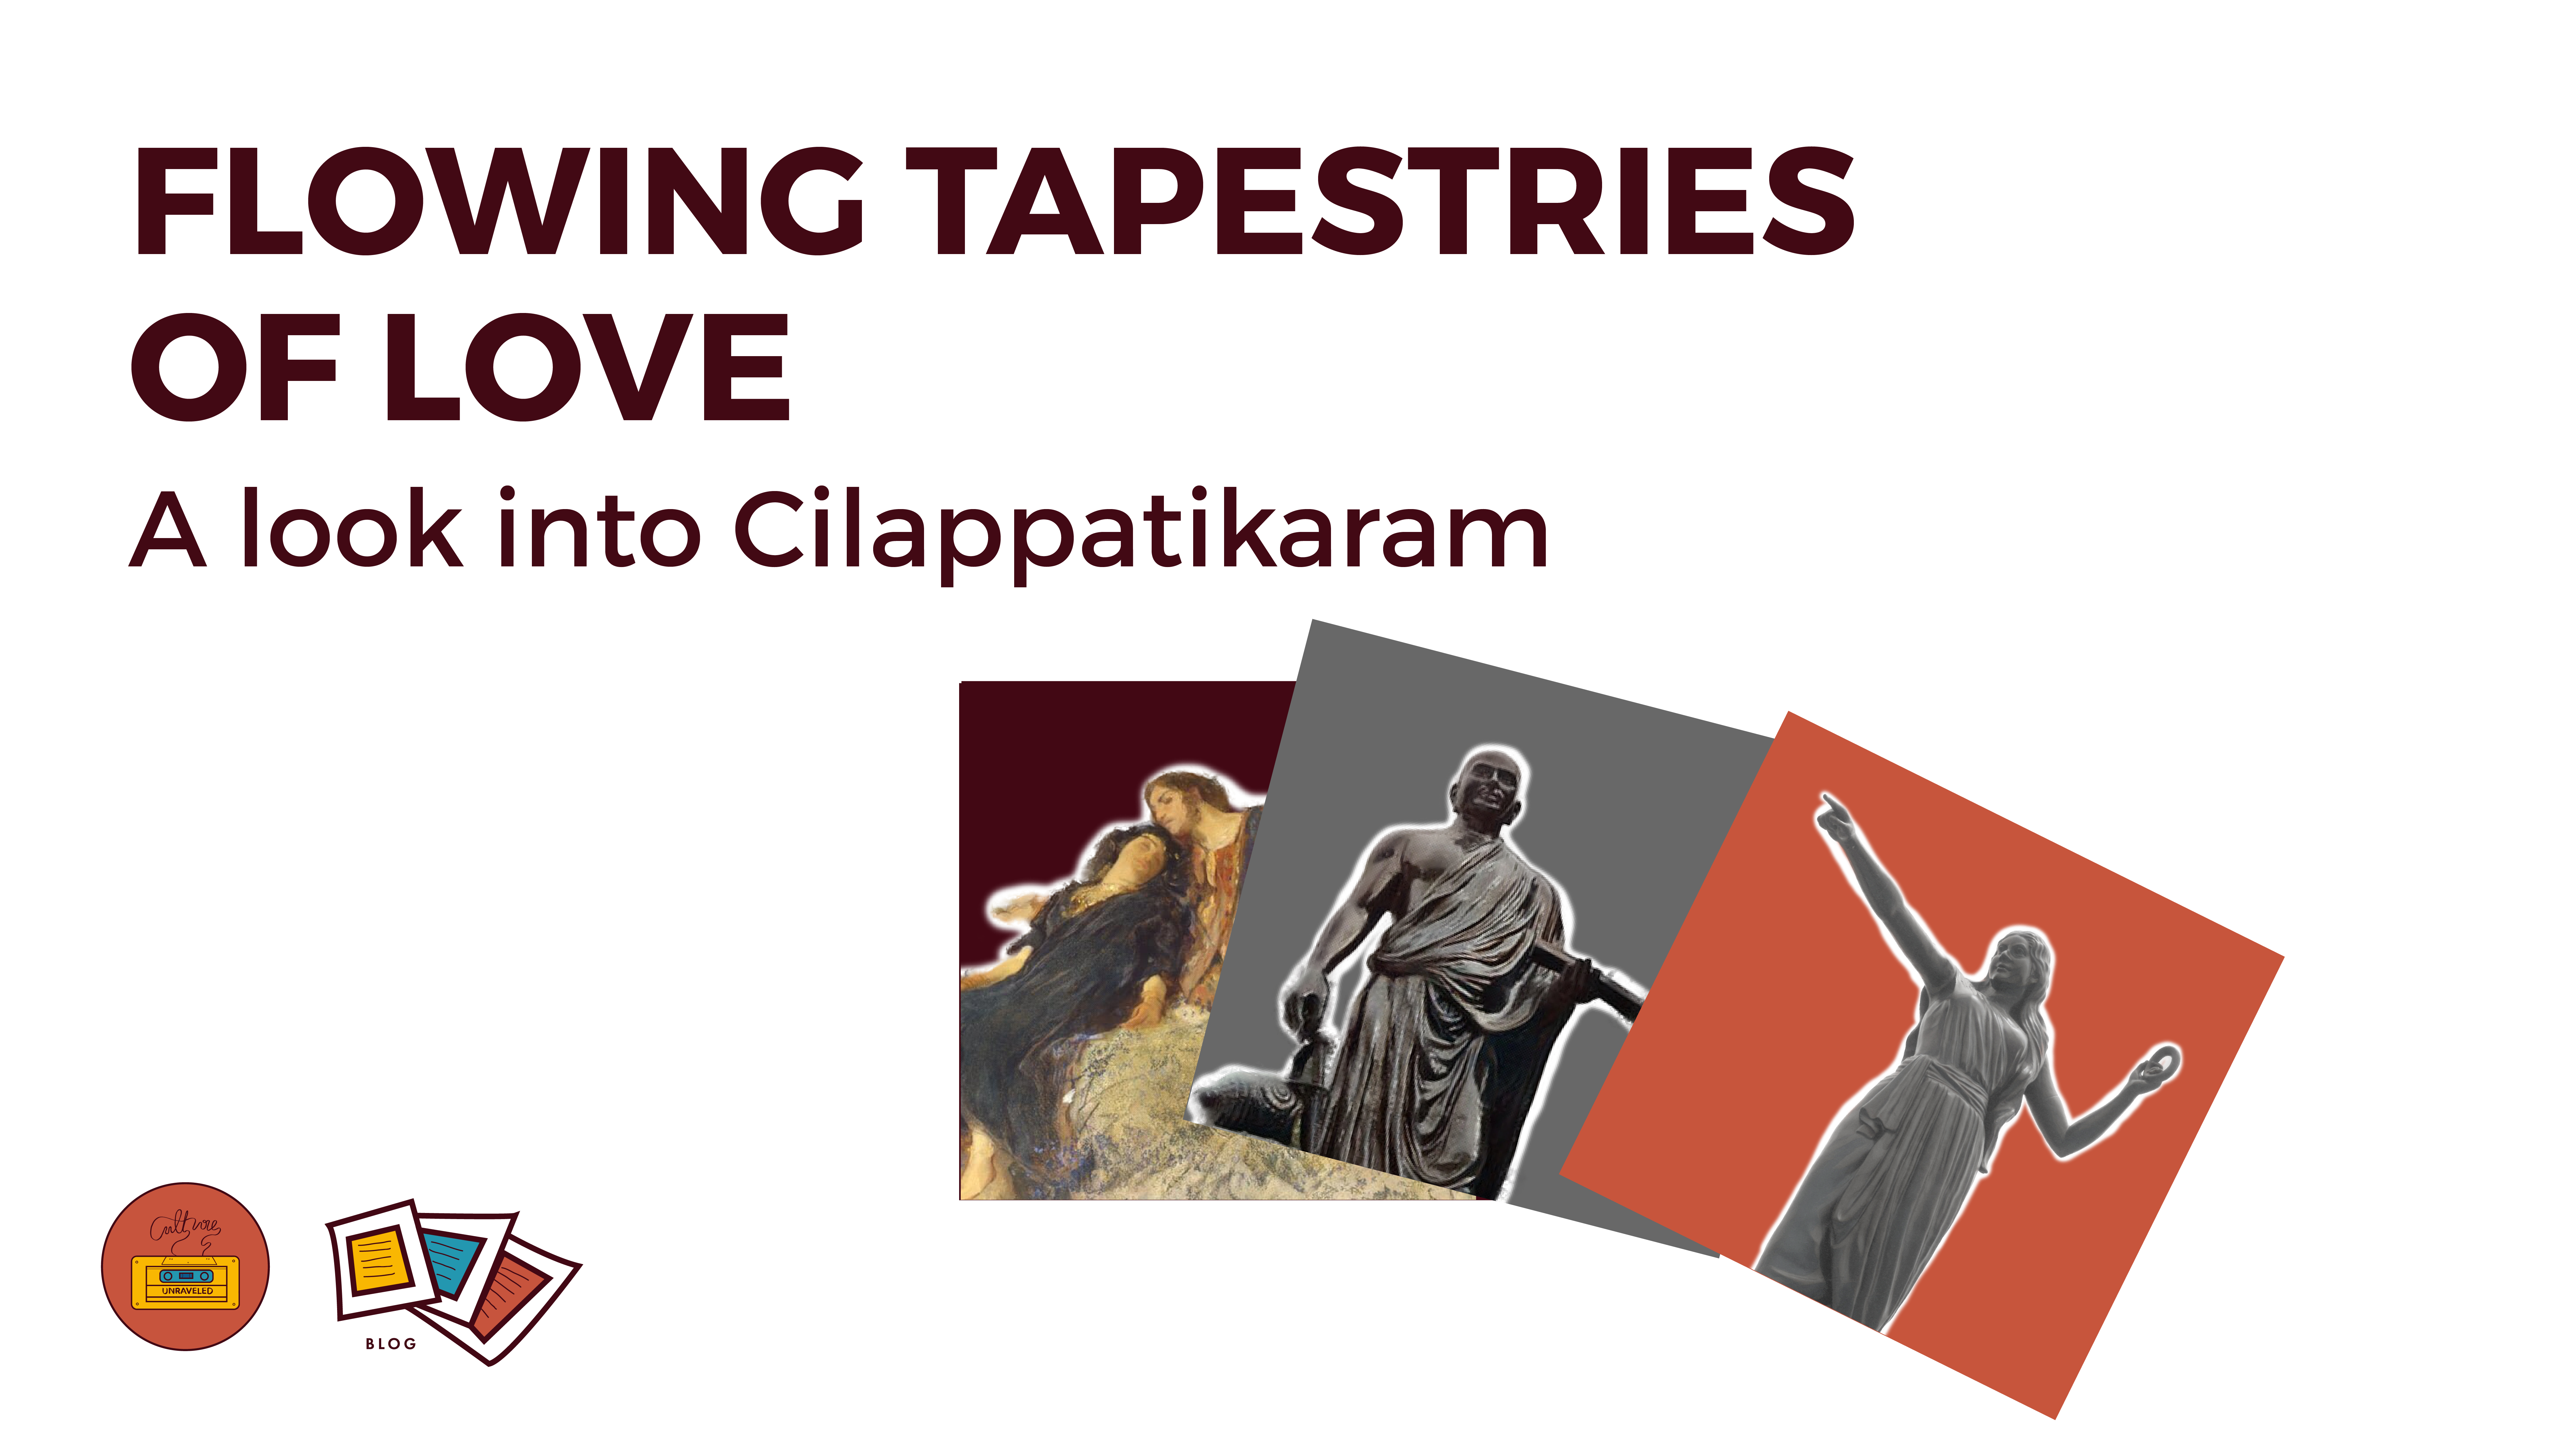 Flowing Tapestries of Love. A look into Cilappatikaram